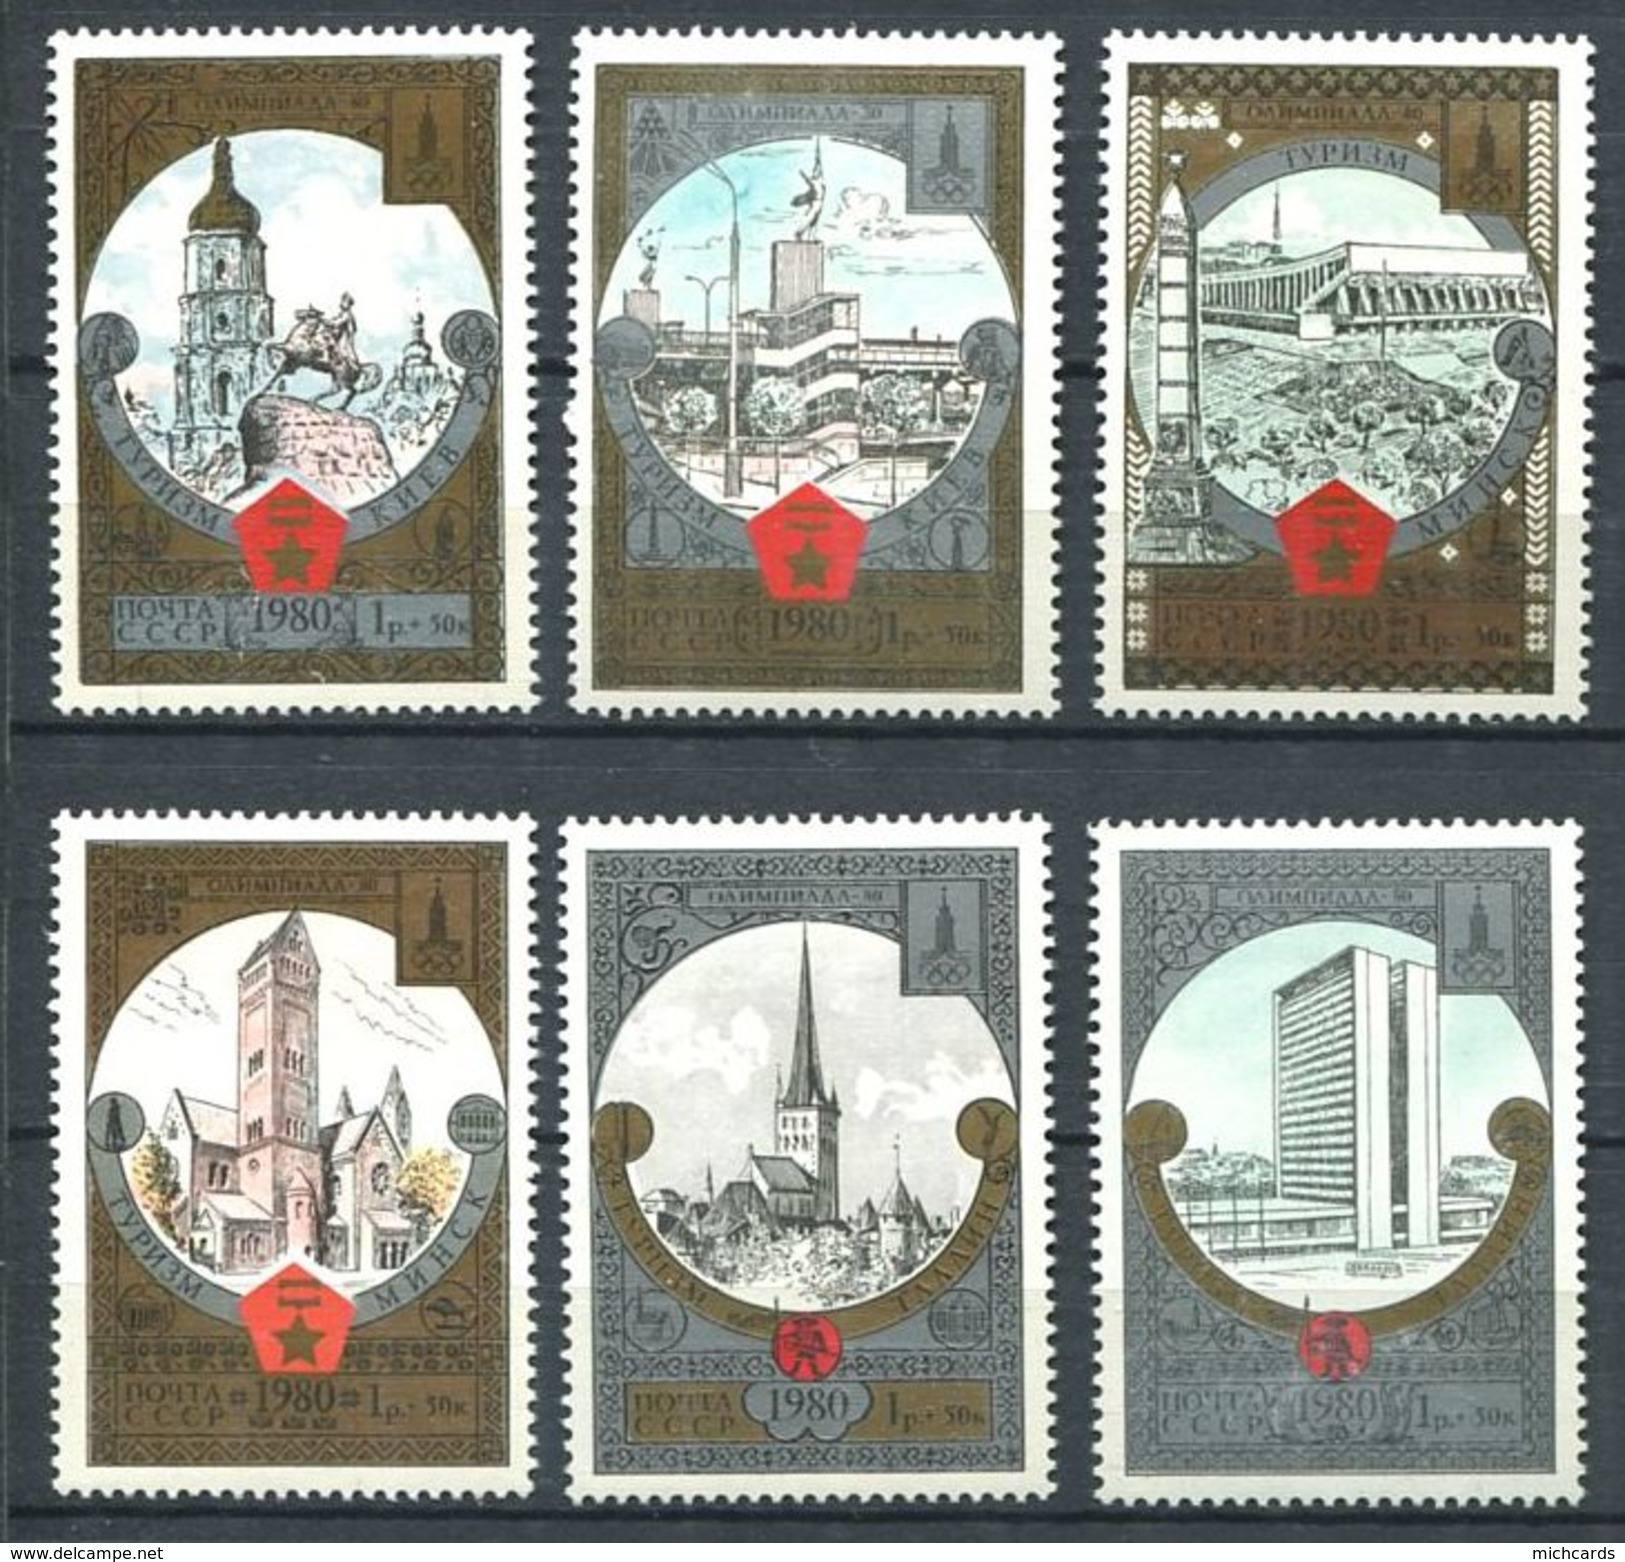 187 RUSSIE (URSS) 1980 - Yvert 4688/93 - Tourisme Armoirie Embleme JO - Neuf ** (MNH) Sans Trace De Charniere - Ungebraucht